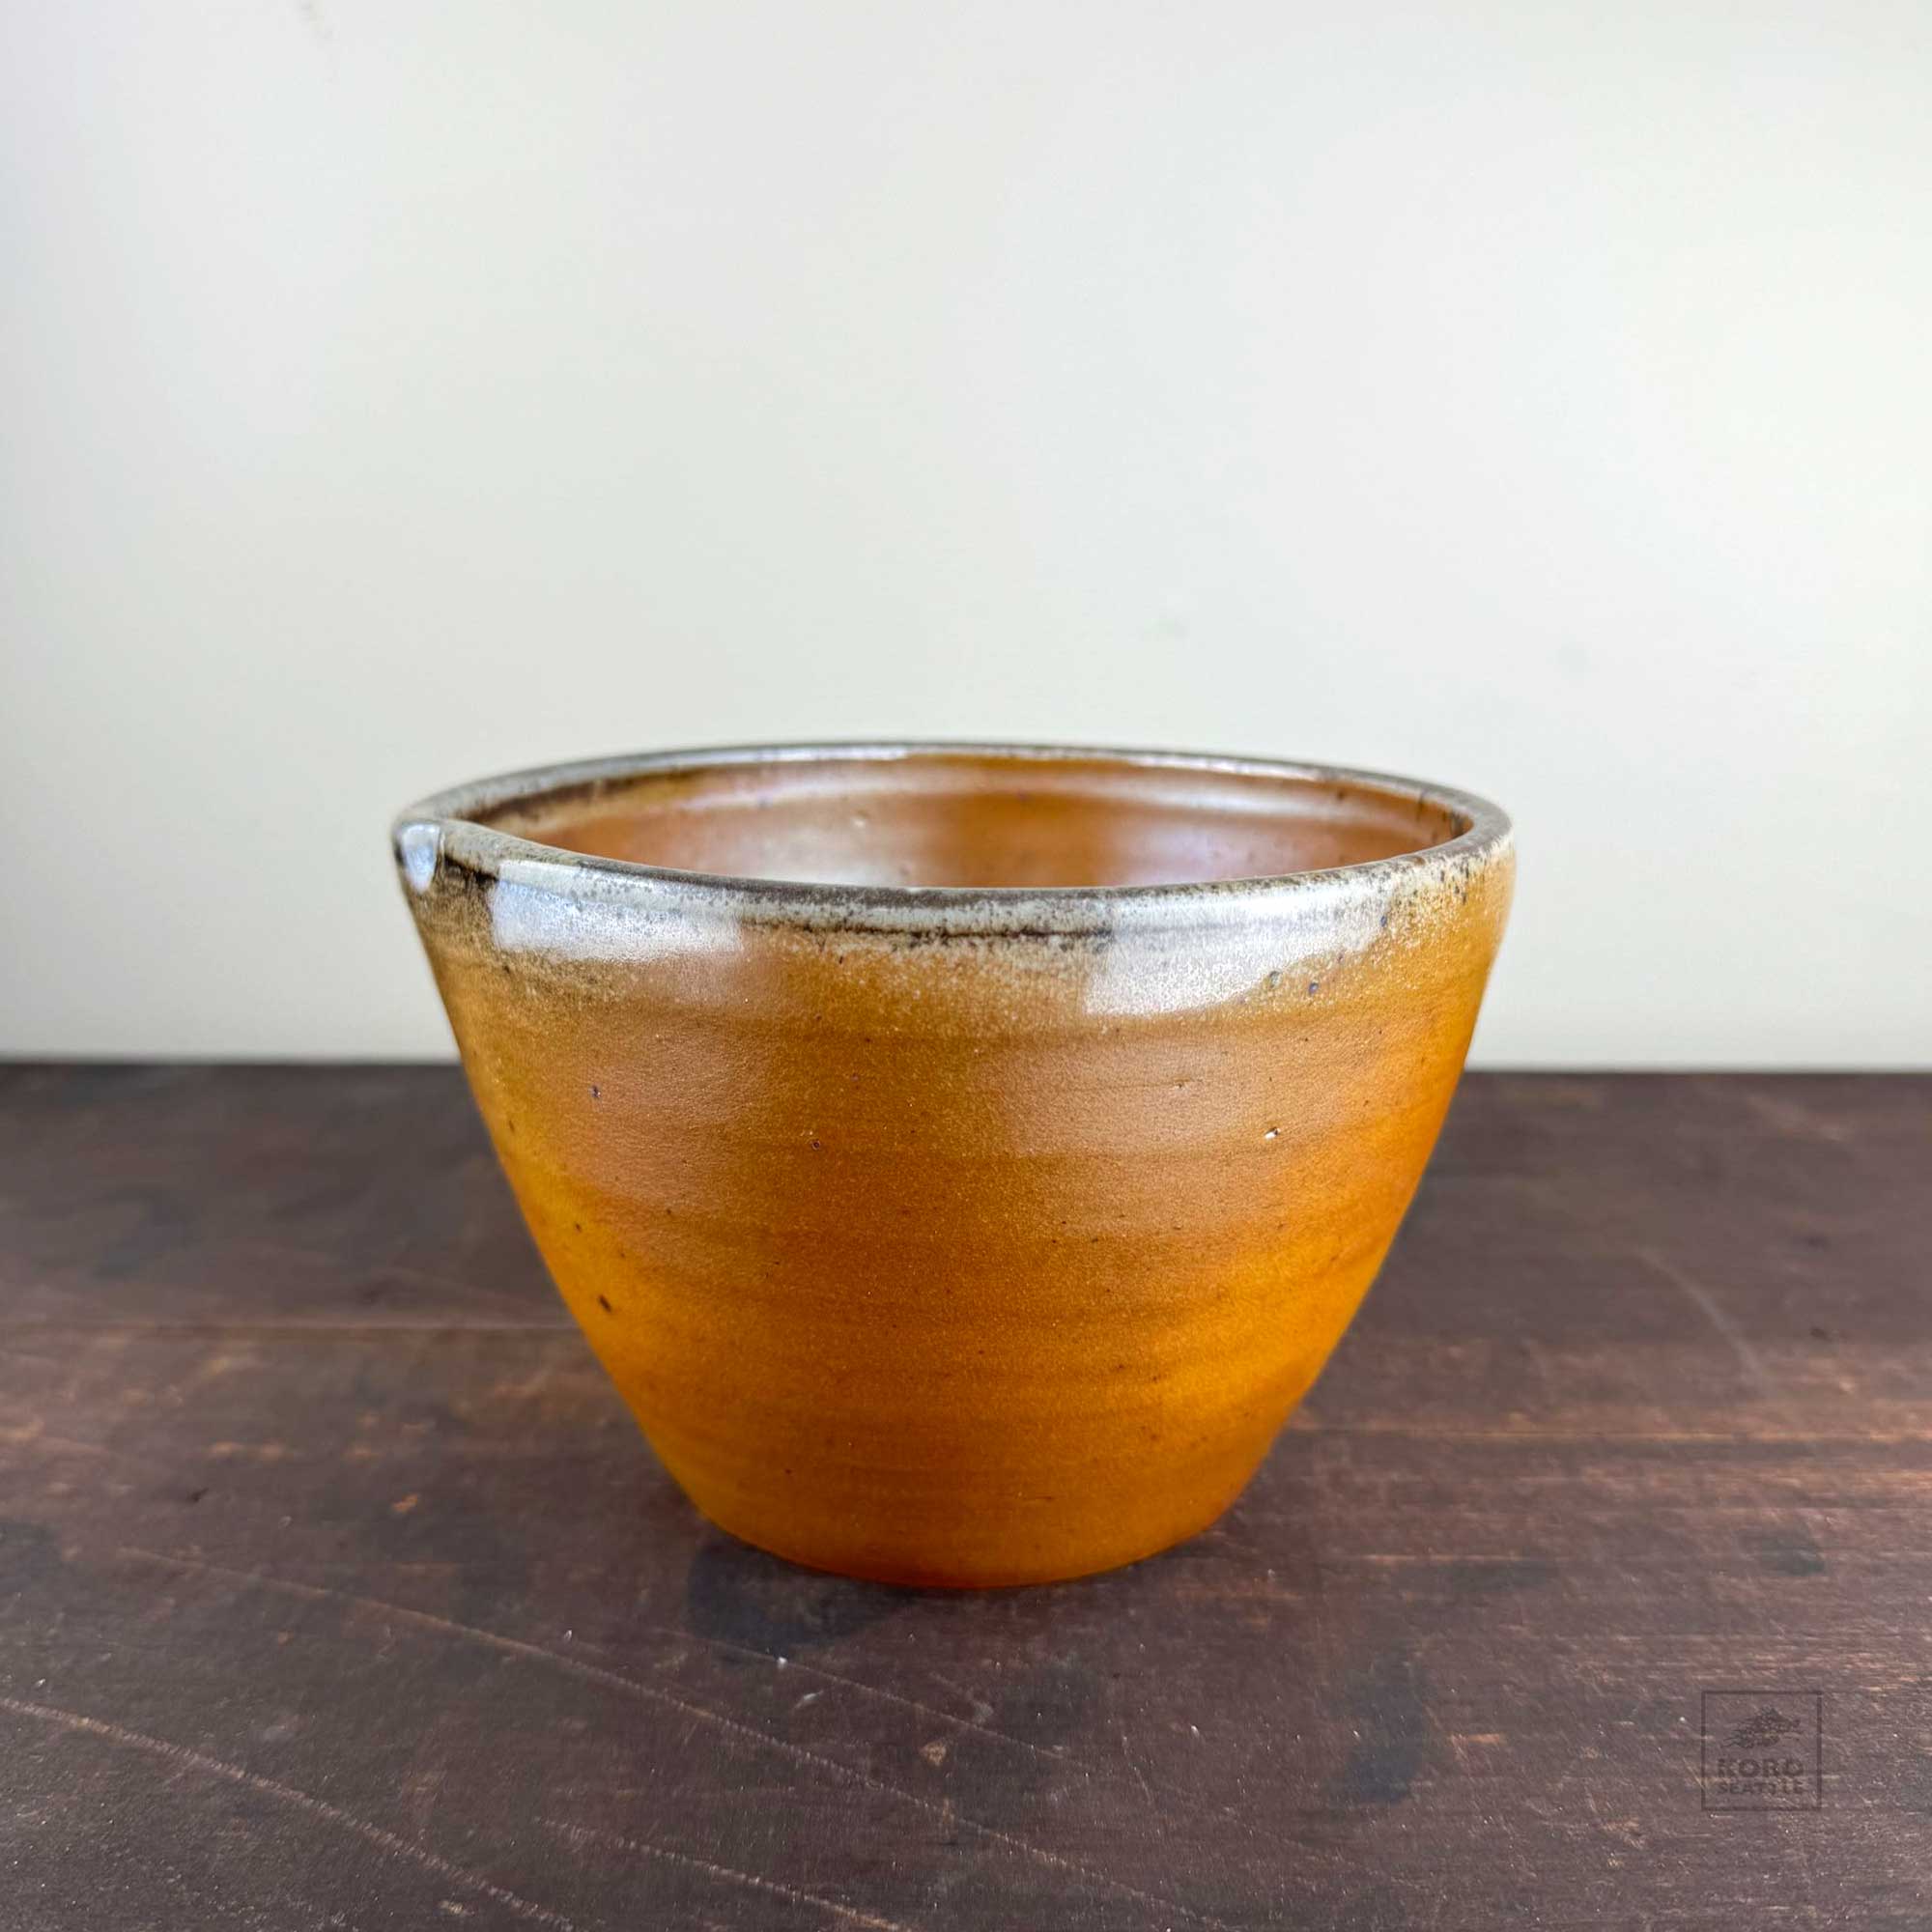 Wood-fired Ramen Bowl by Robin Hominiuk